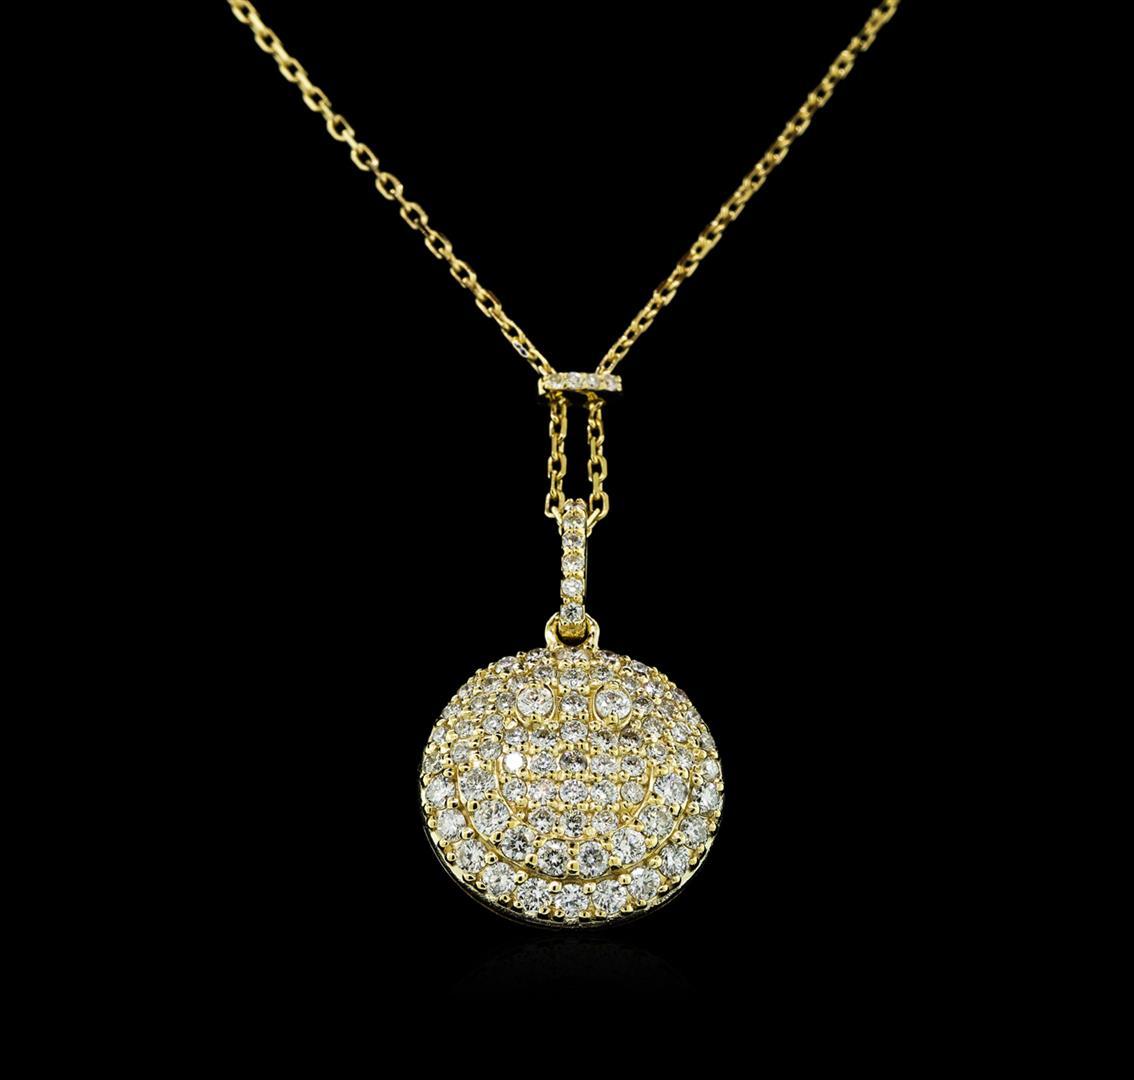 1.25 ctw Diamond Necklace - 14KT Yellow Gold